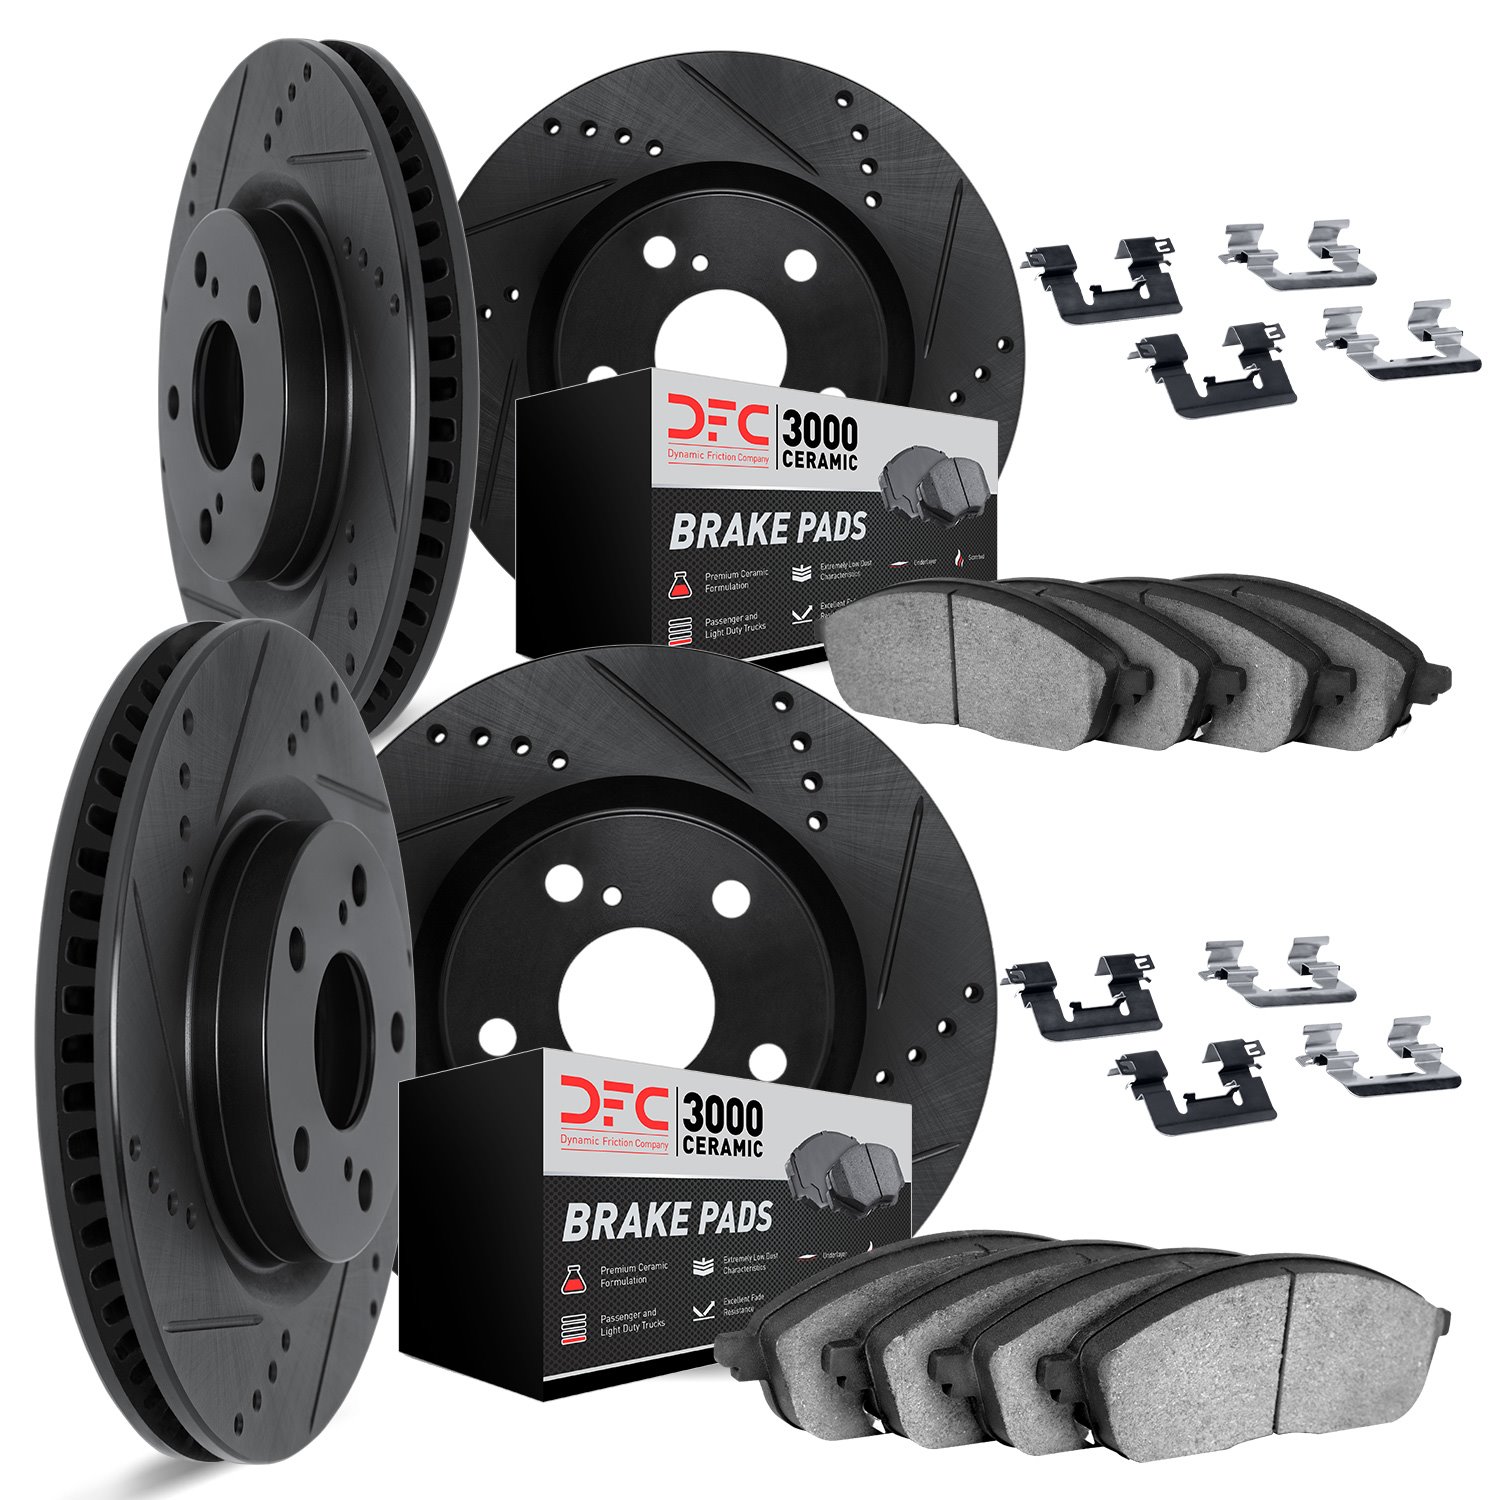 8314-75027 Drilled/Slotted Brake Rotors with 3000-Series Ceramic Brake Pads Kit & Hardware [Black], Fits Select Lexus/Toyota/Sci